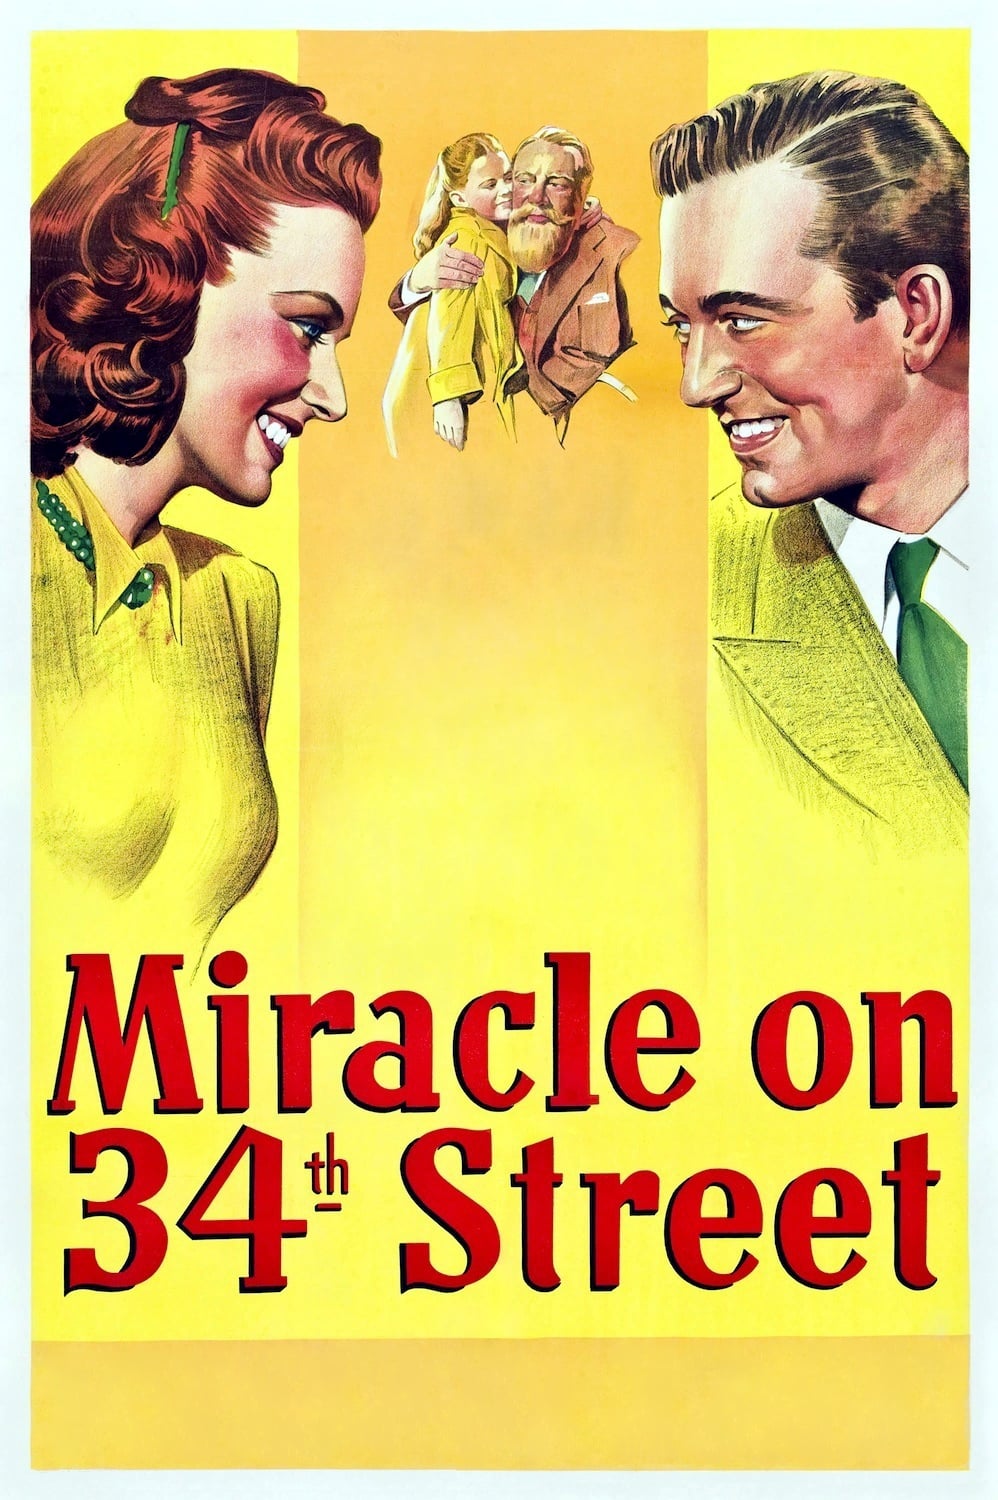 Plakát pro film “Zázrak v New Yorku”